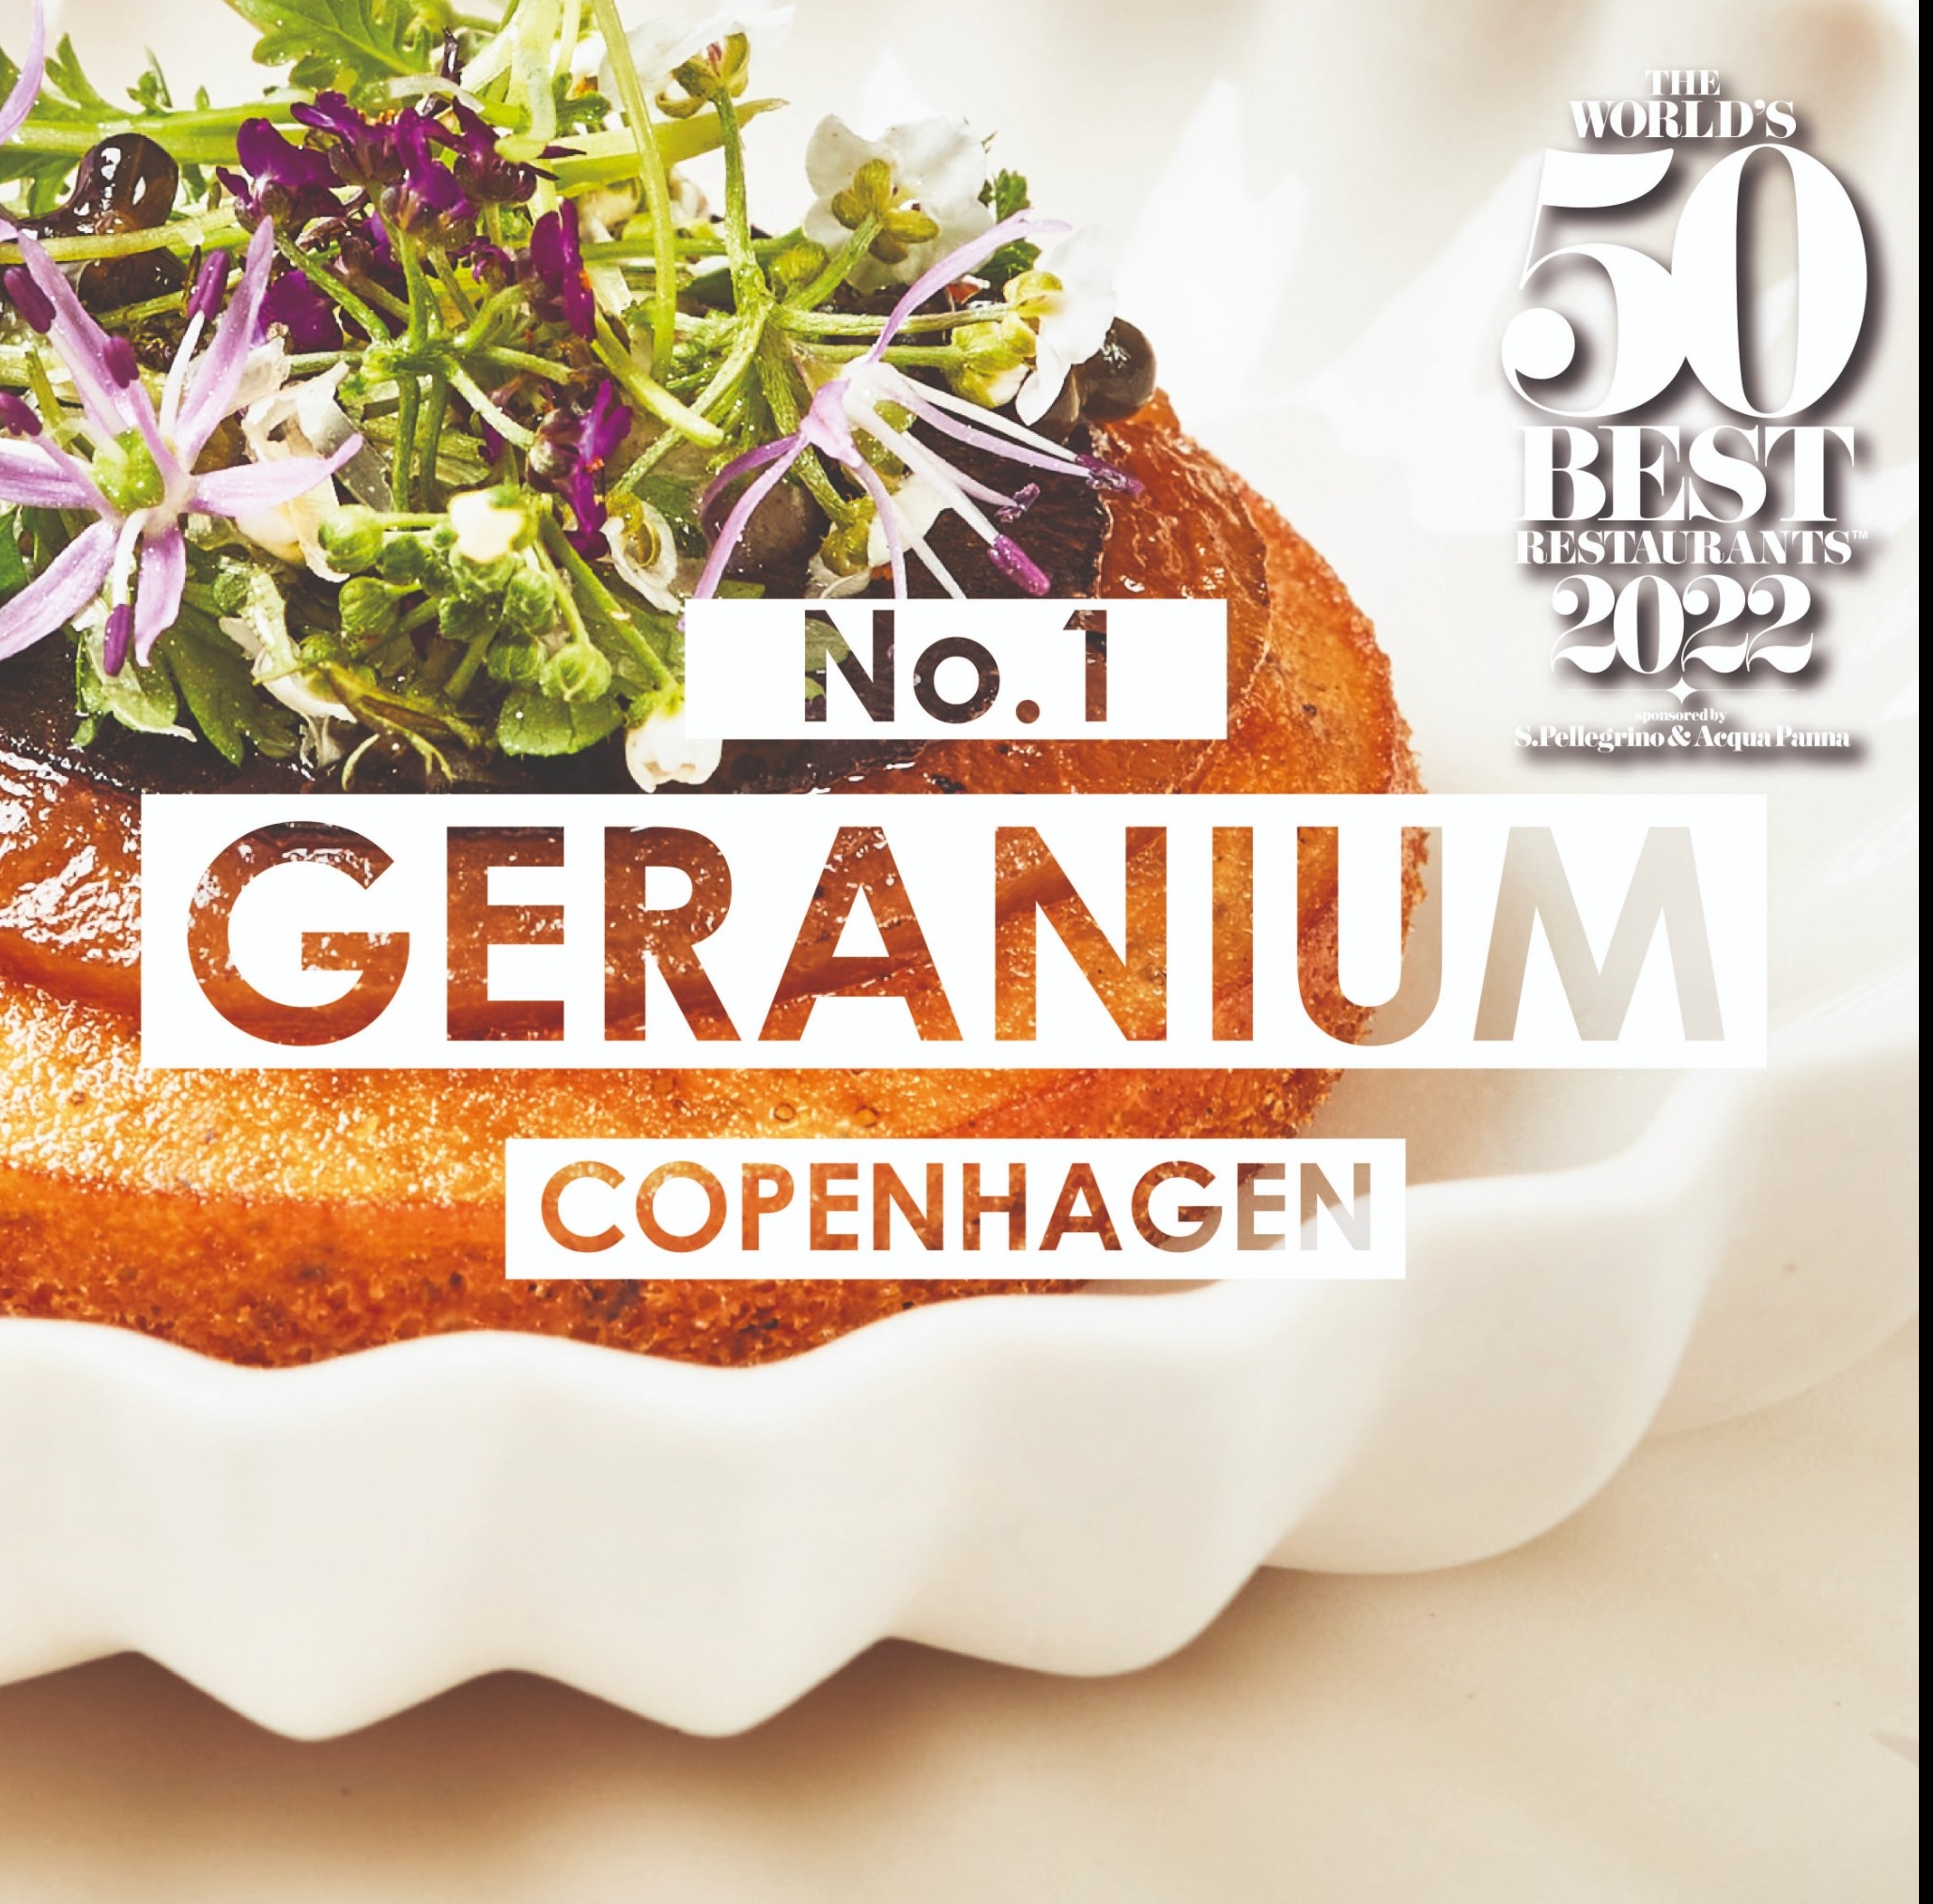 Restaurantul Geranium declarat cel mai bun din lume